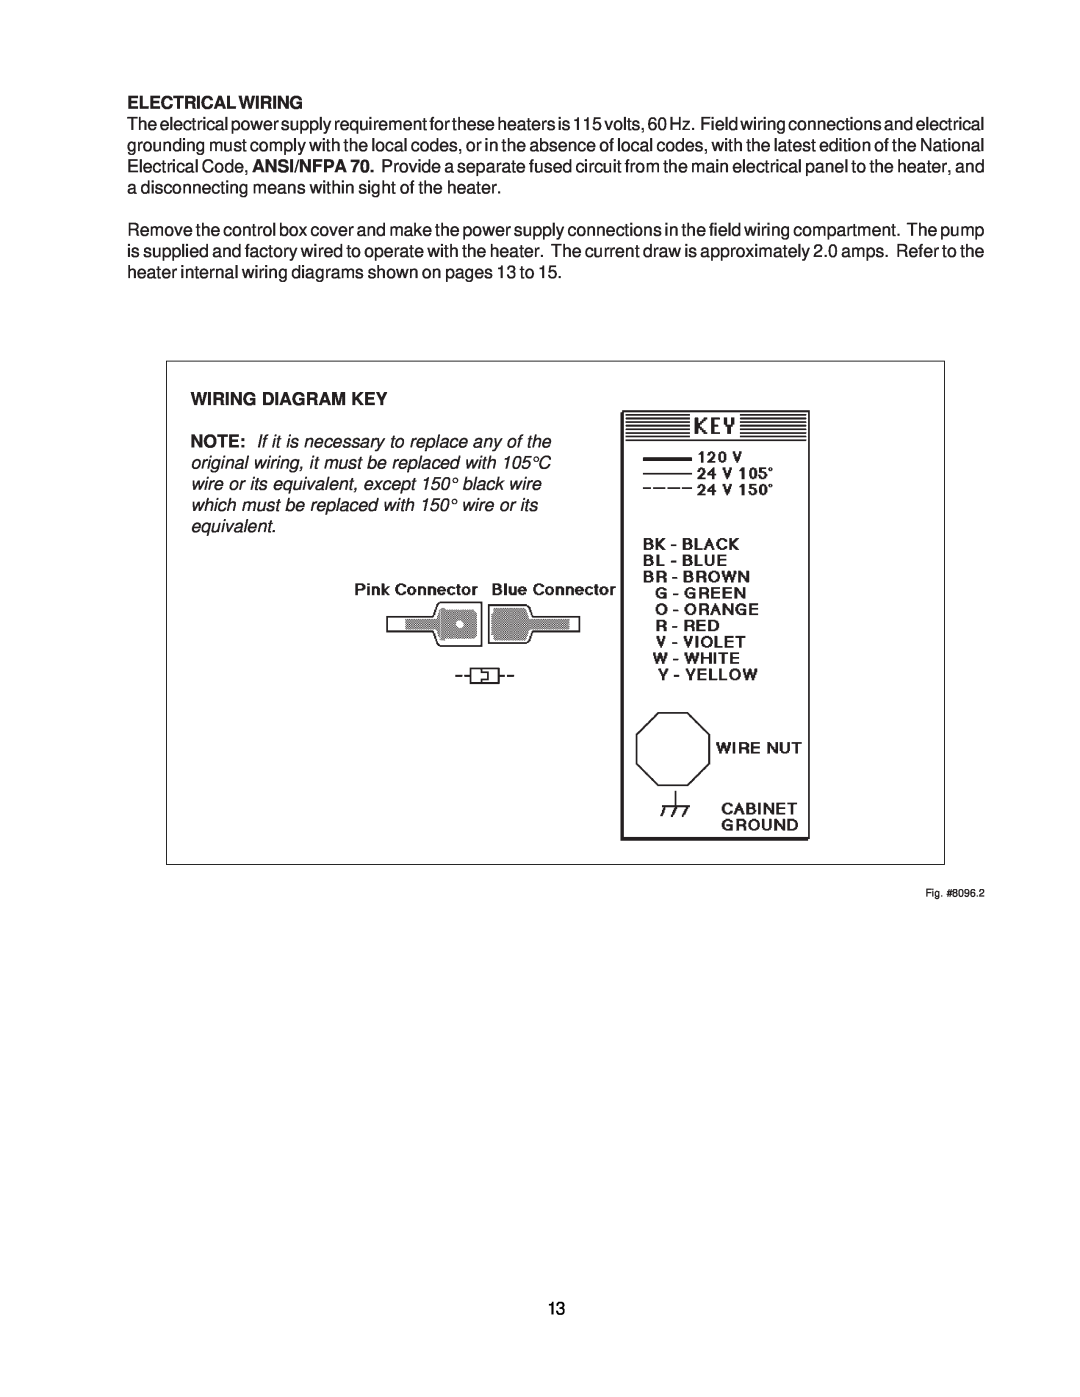 Raypak 260-401 manual Electricalwiring, Wiring Diagram Key, Fig. #8096.2 